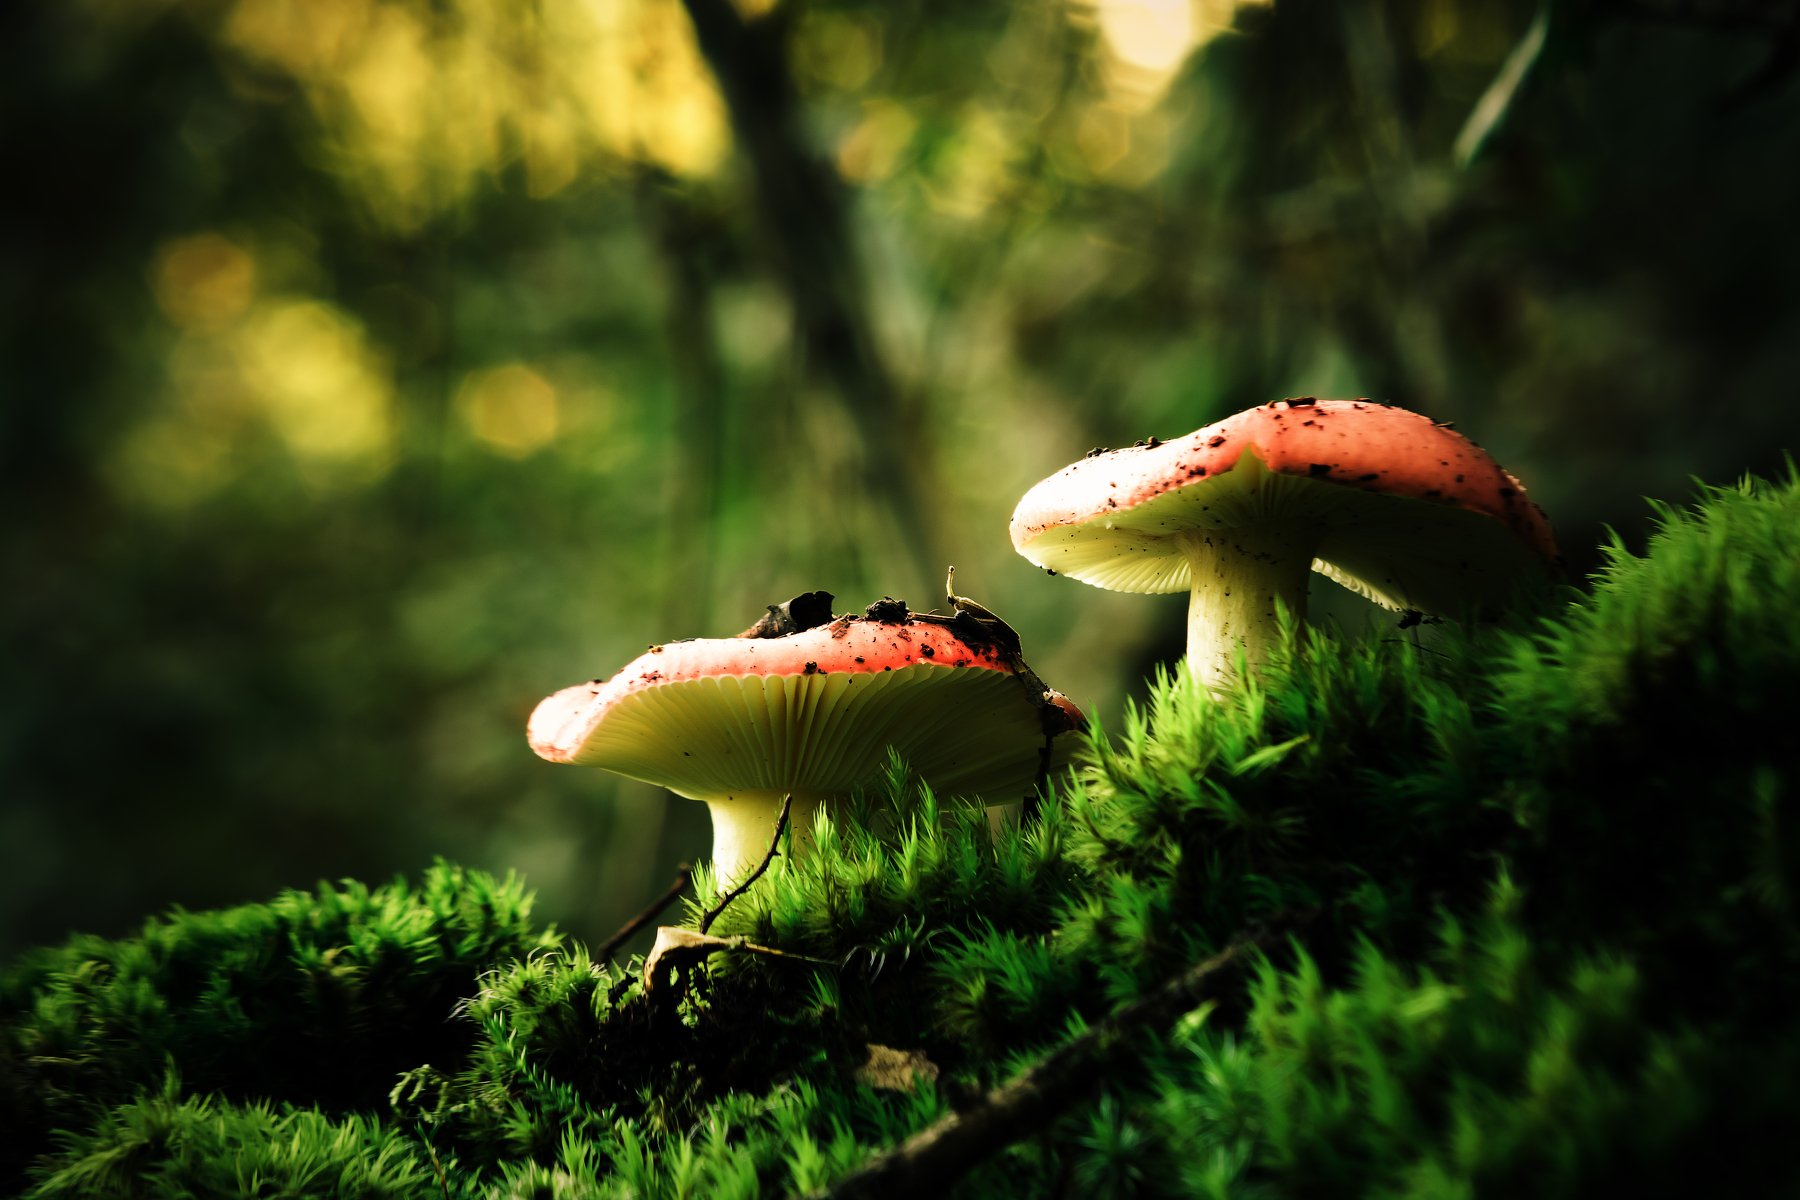 small, two, mushroom, red, green, nature, Antonio Coelho